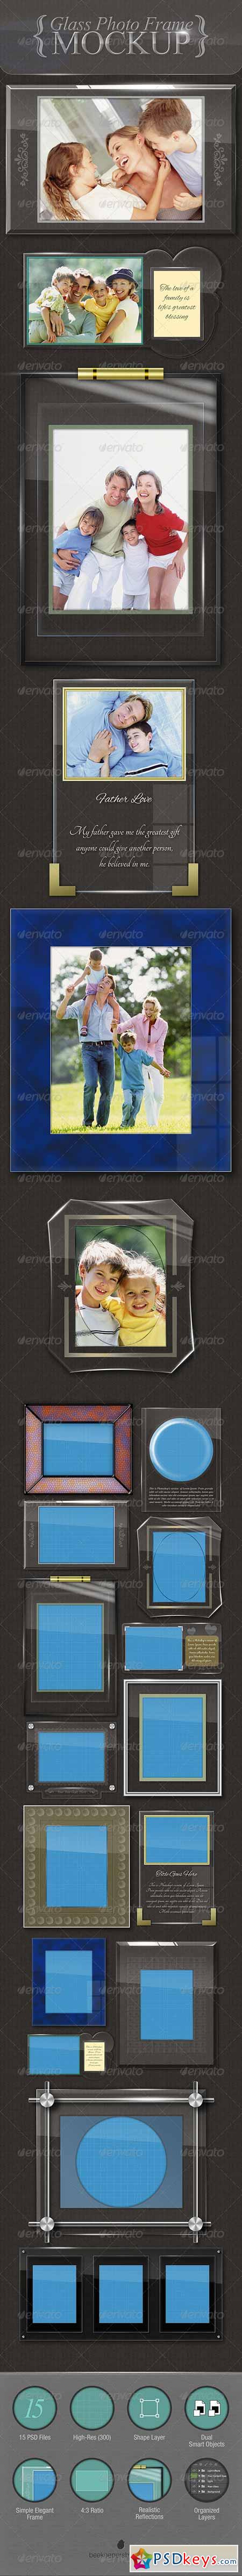 Glass Photo Frames - Mockup 5840826